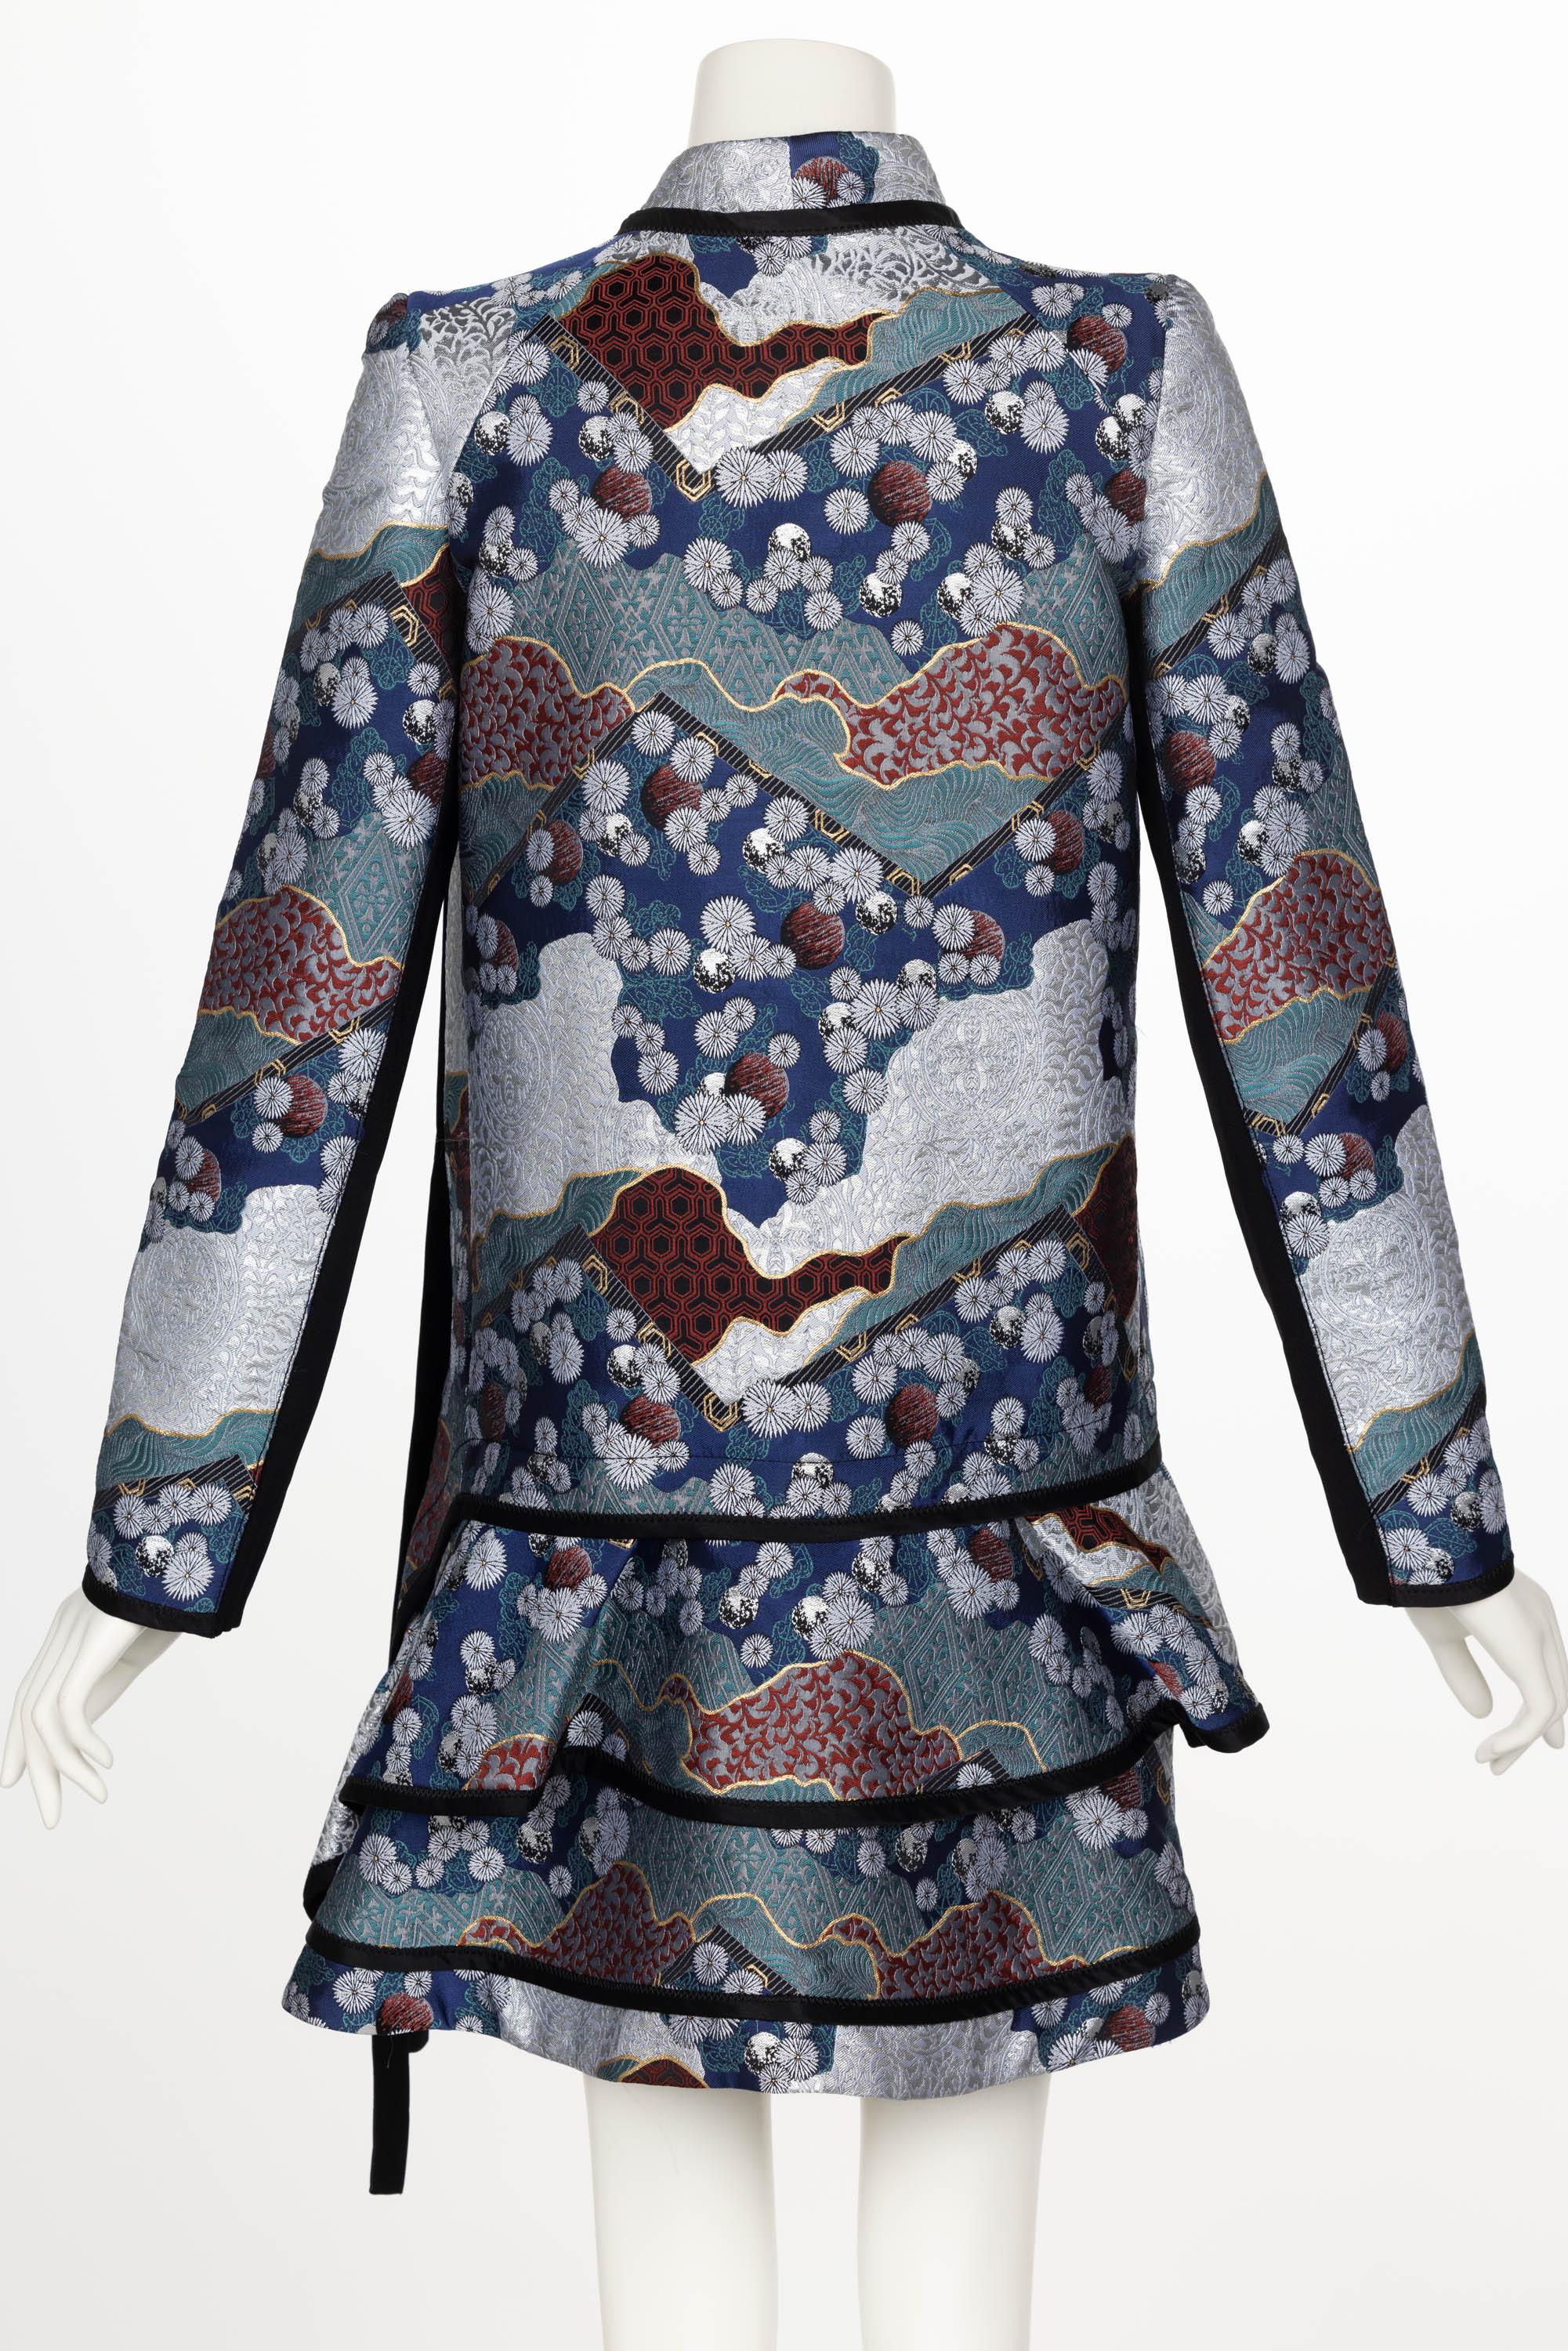 Proenza Schouler Fall 2012 Brocade Dress / Coat For Sale 1